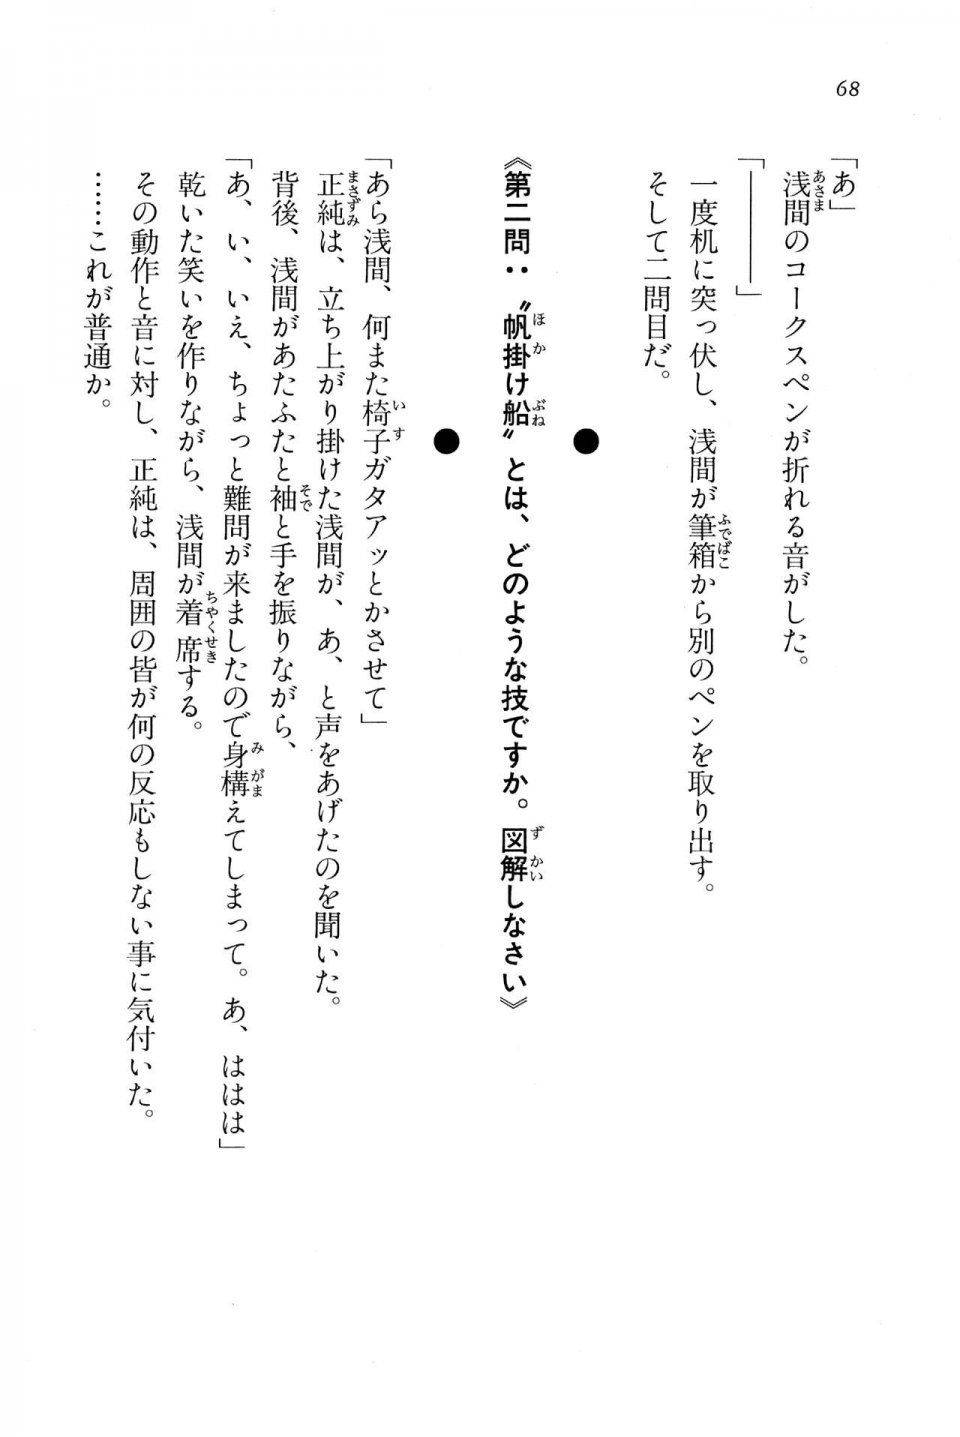 Kyoukai Senjou no Horizon BD Special Mininovel Vol 7(4A) - Photo #72